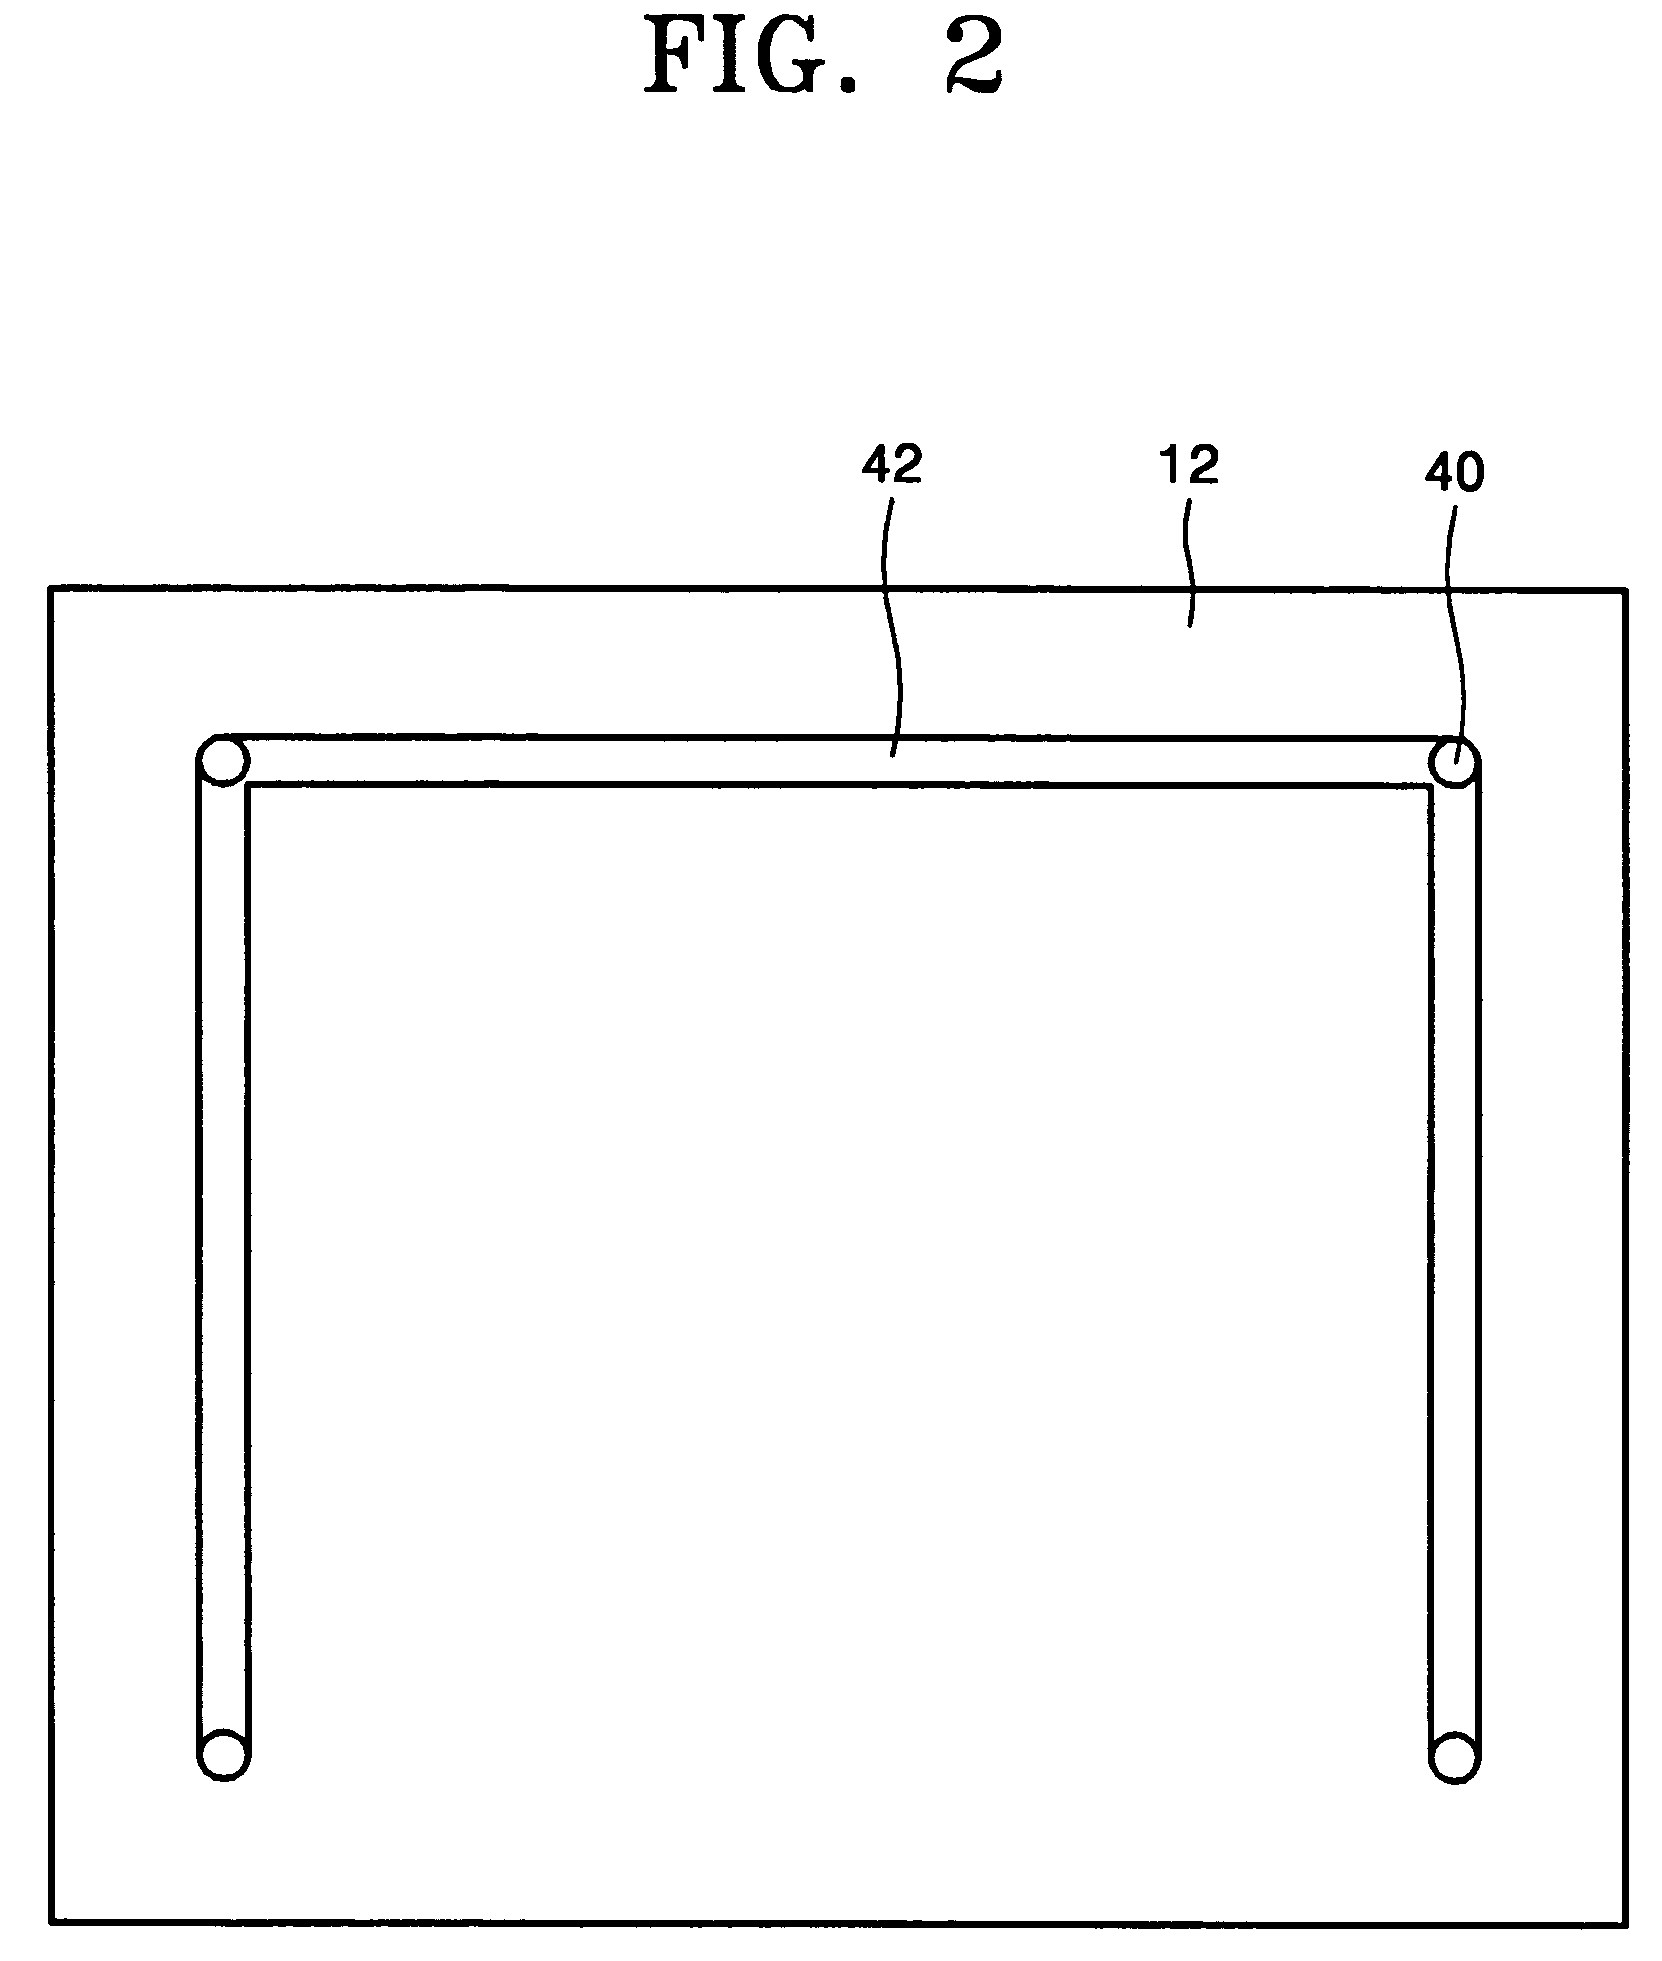 Flat panel display having reduced line resistance